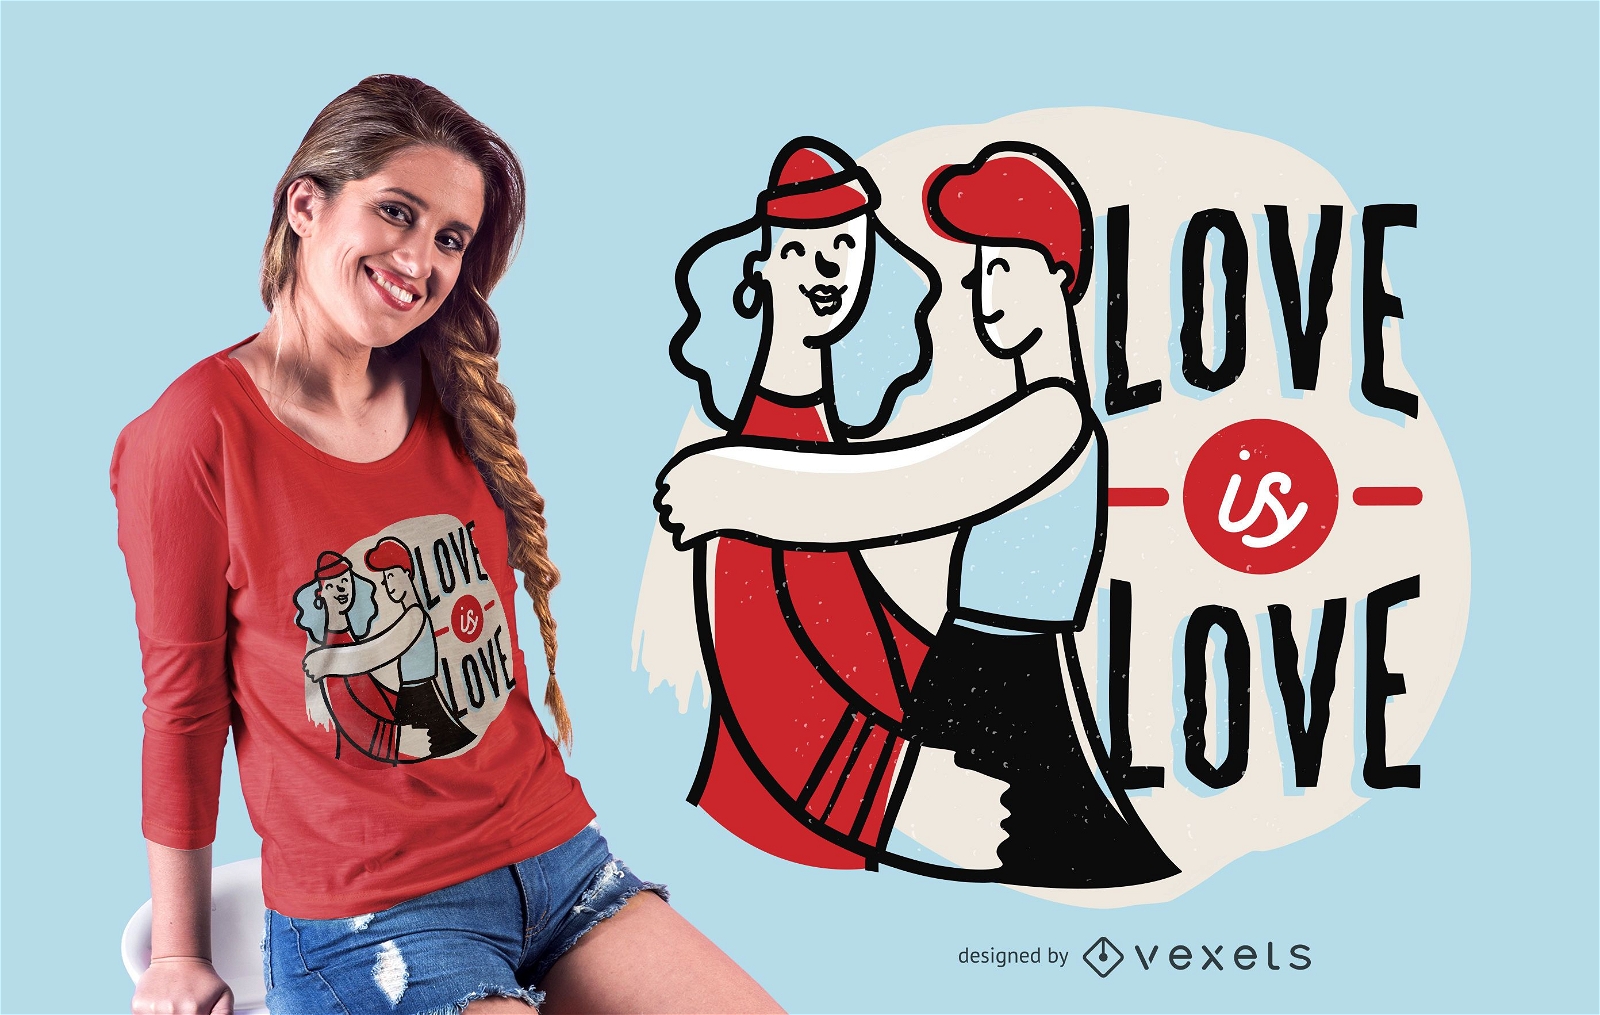 Love is love lesbian couple t-shirt design